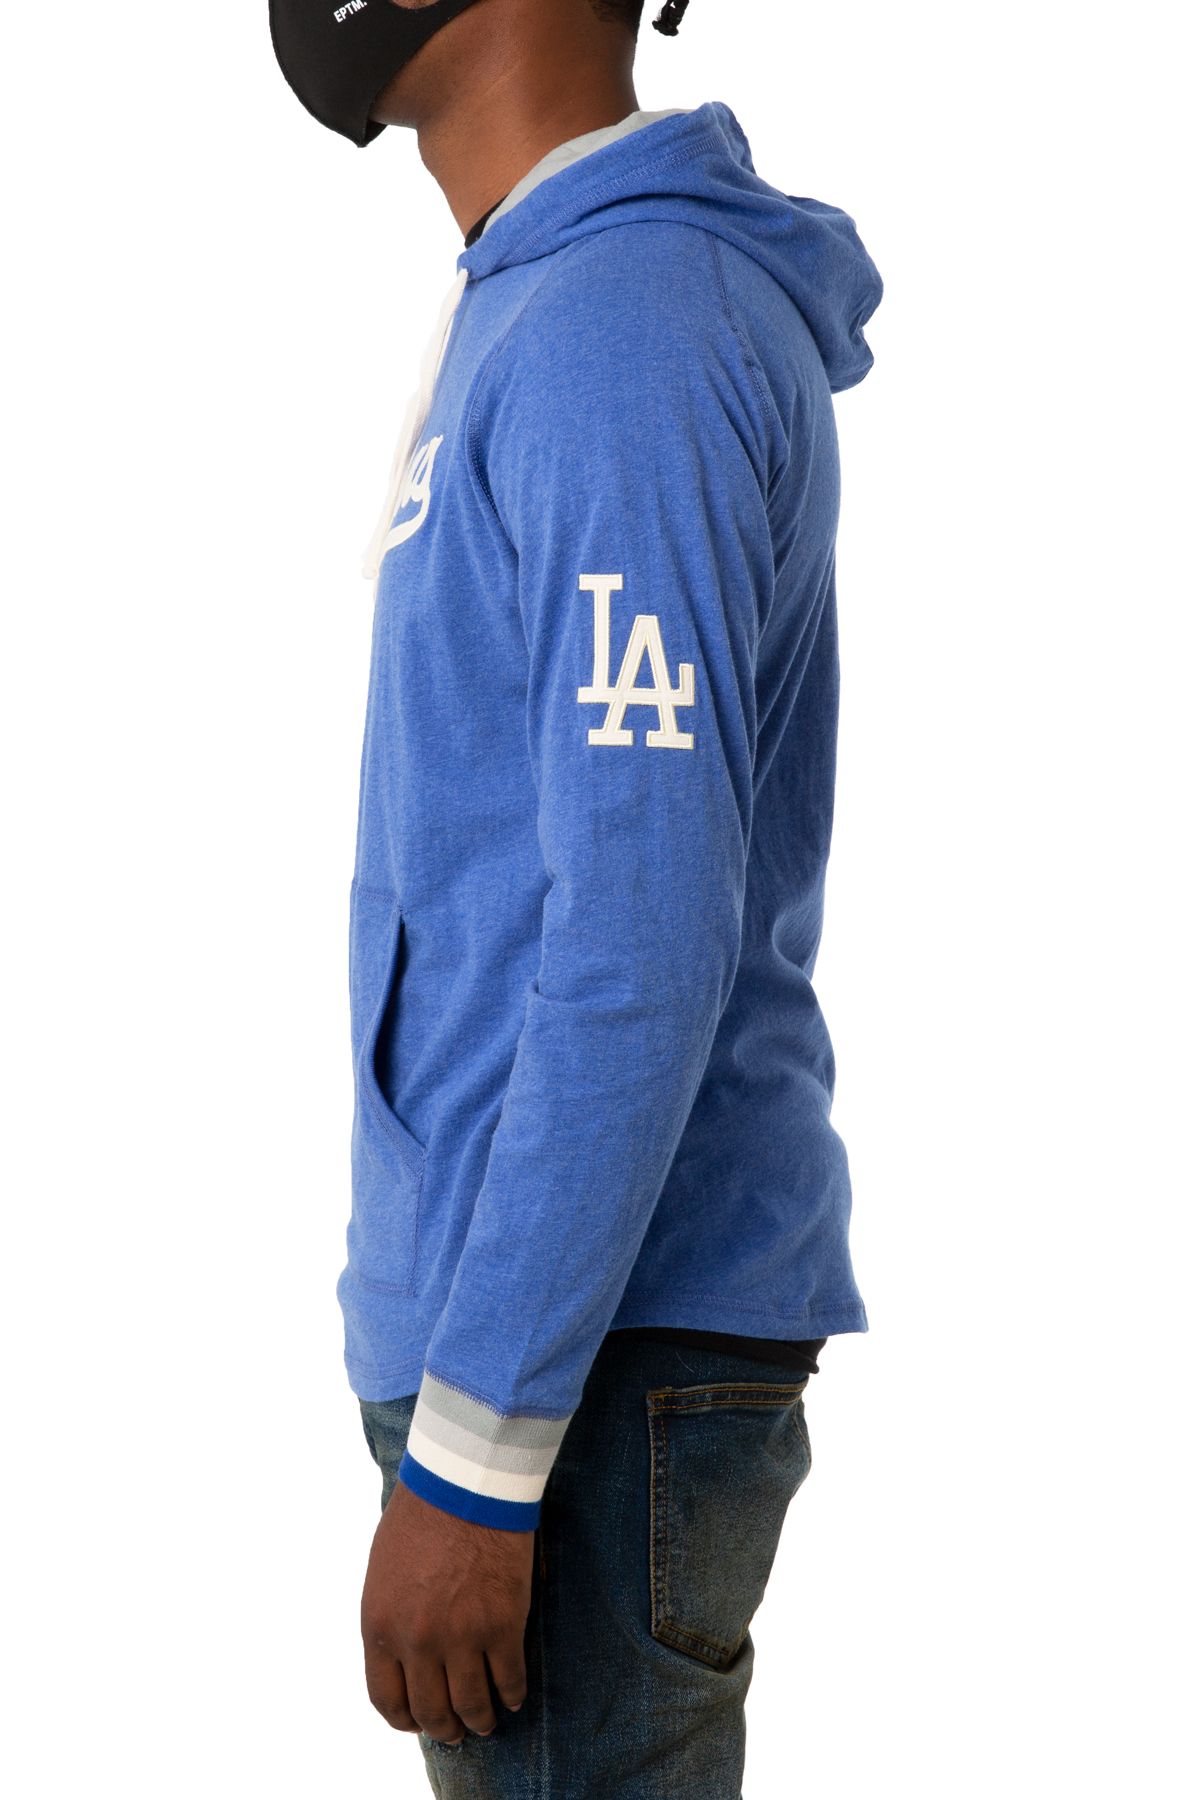 Lids Los Angeles Dodgers Levelwear Women's Vivid Scuba Neck Long Sleeve  Hoodie T-Shirt - Heather Royal